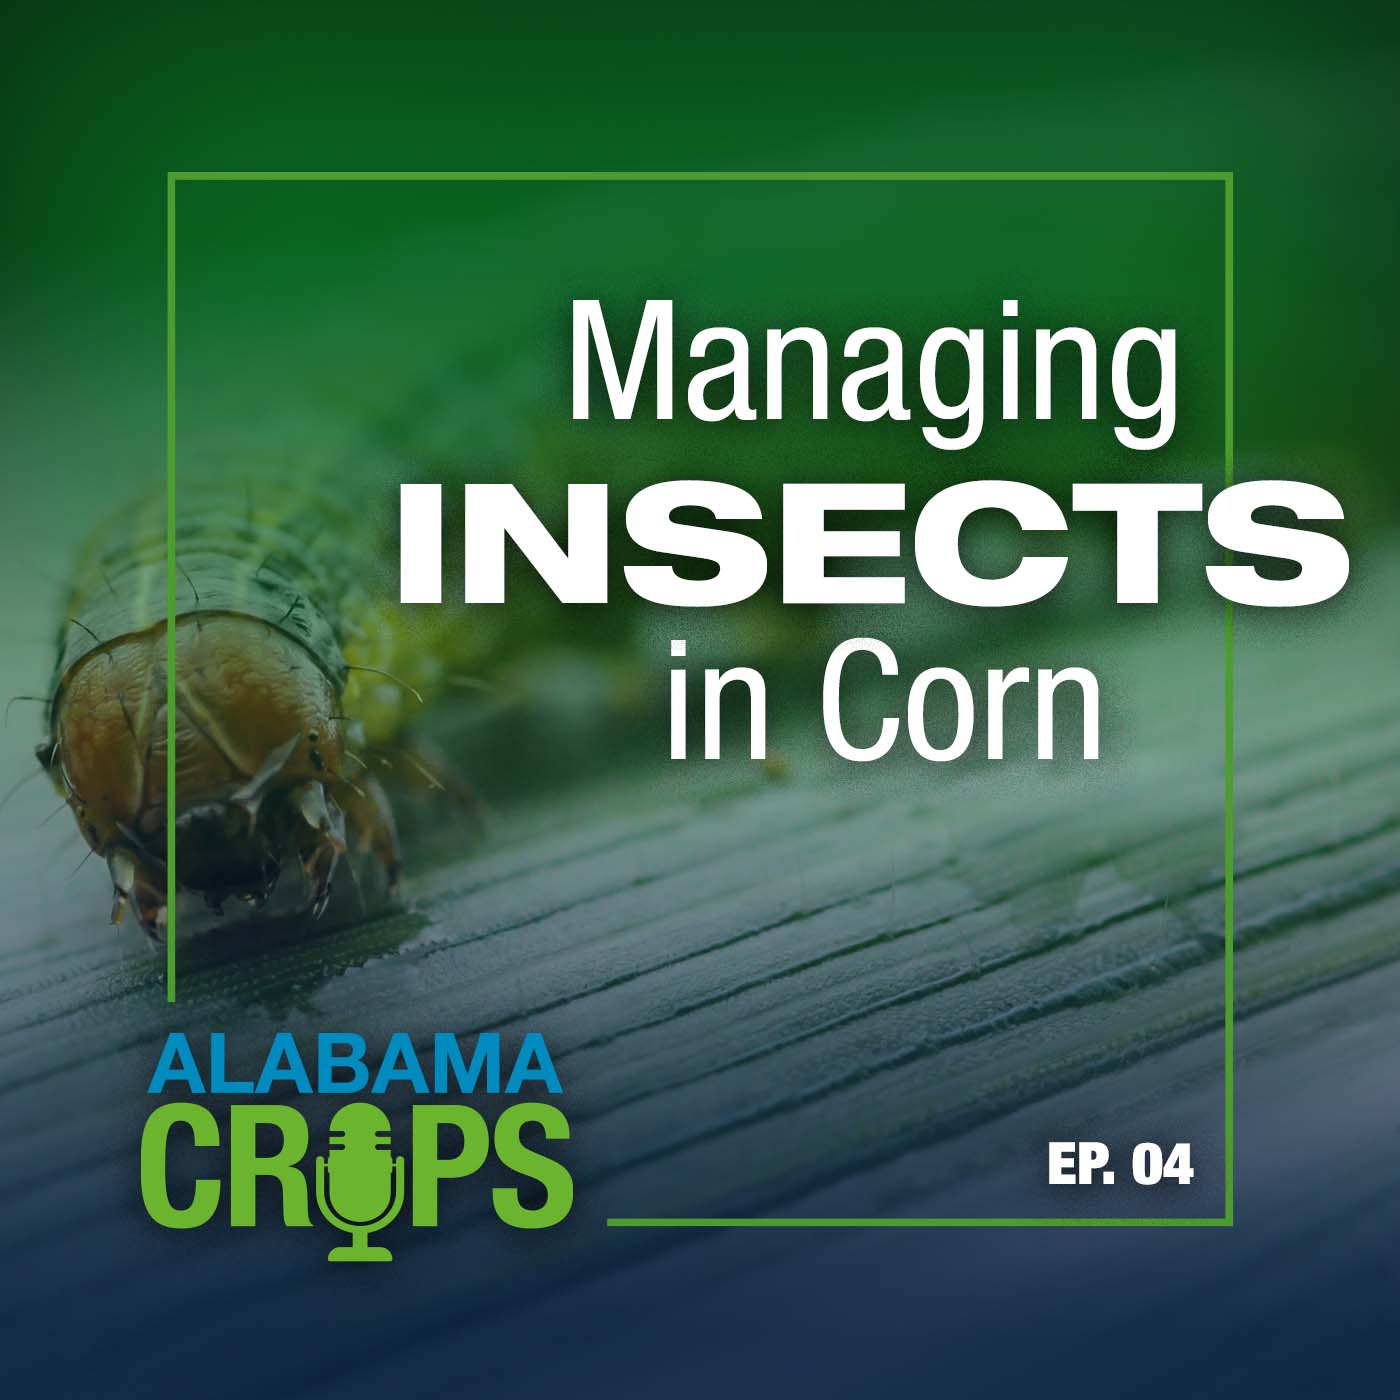 Alabama Pest Report - Alabama Cooperative Extension System